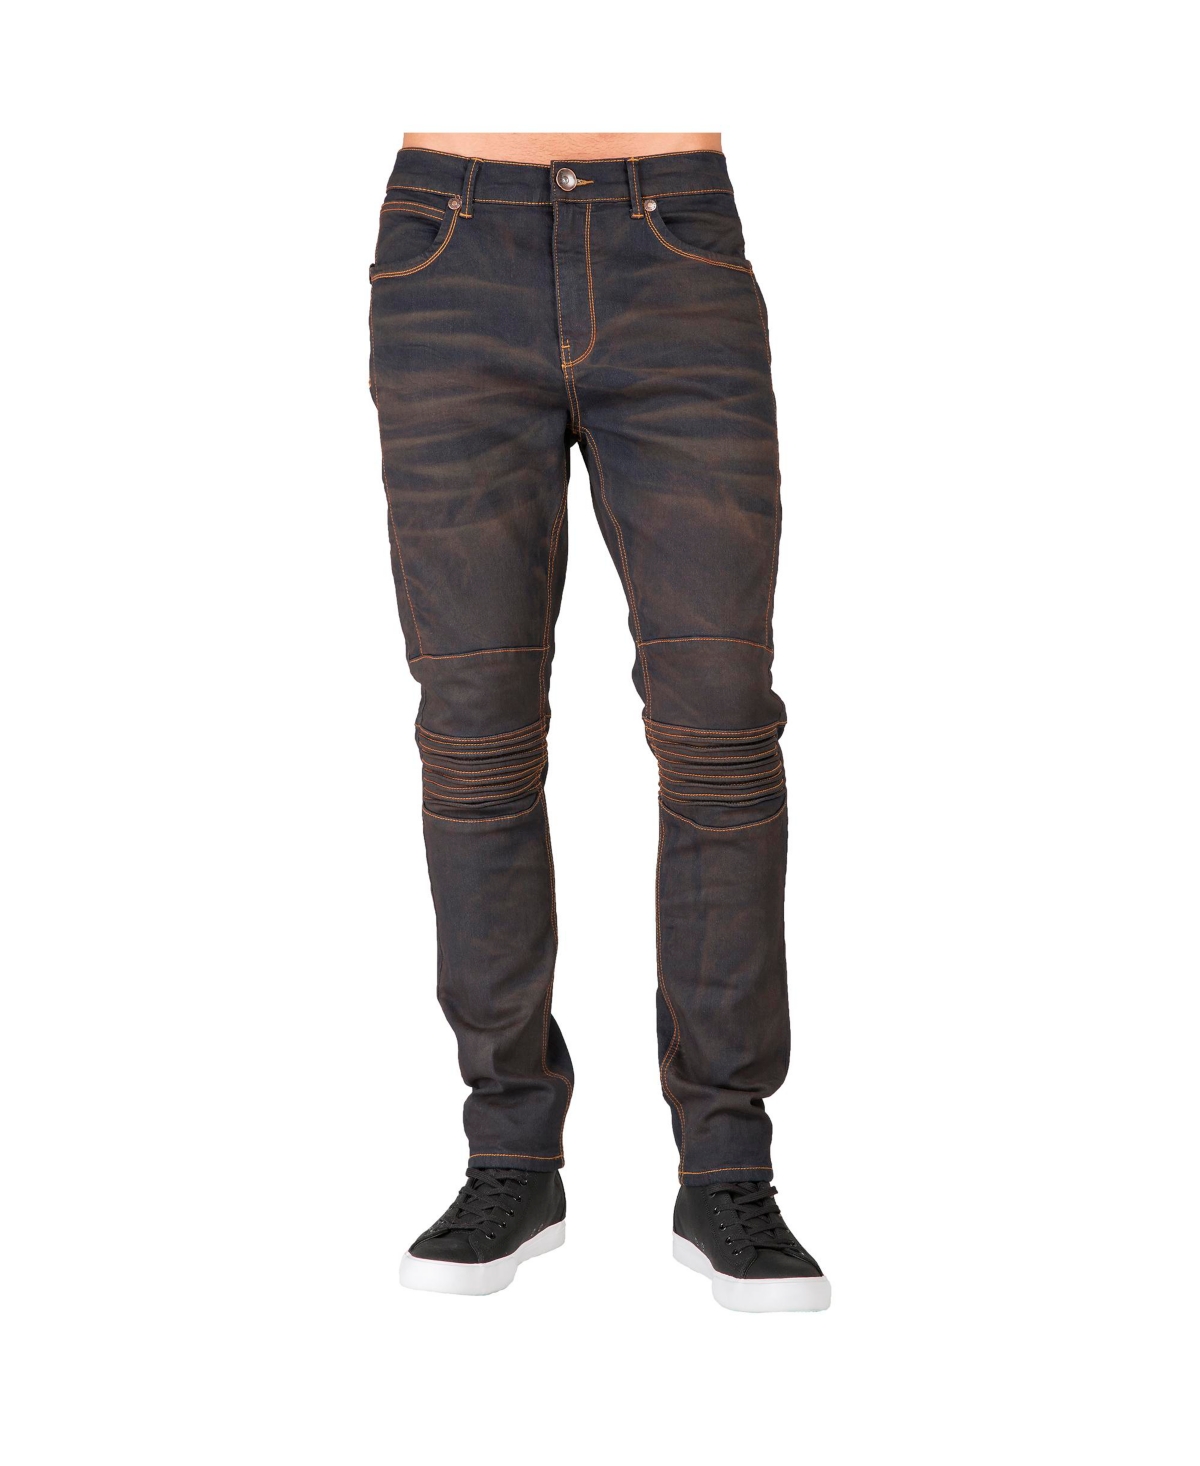 Men's Premium Stretch Denim Moto Jeans Slim Tapered Fit Copper Wash - Copper tint